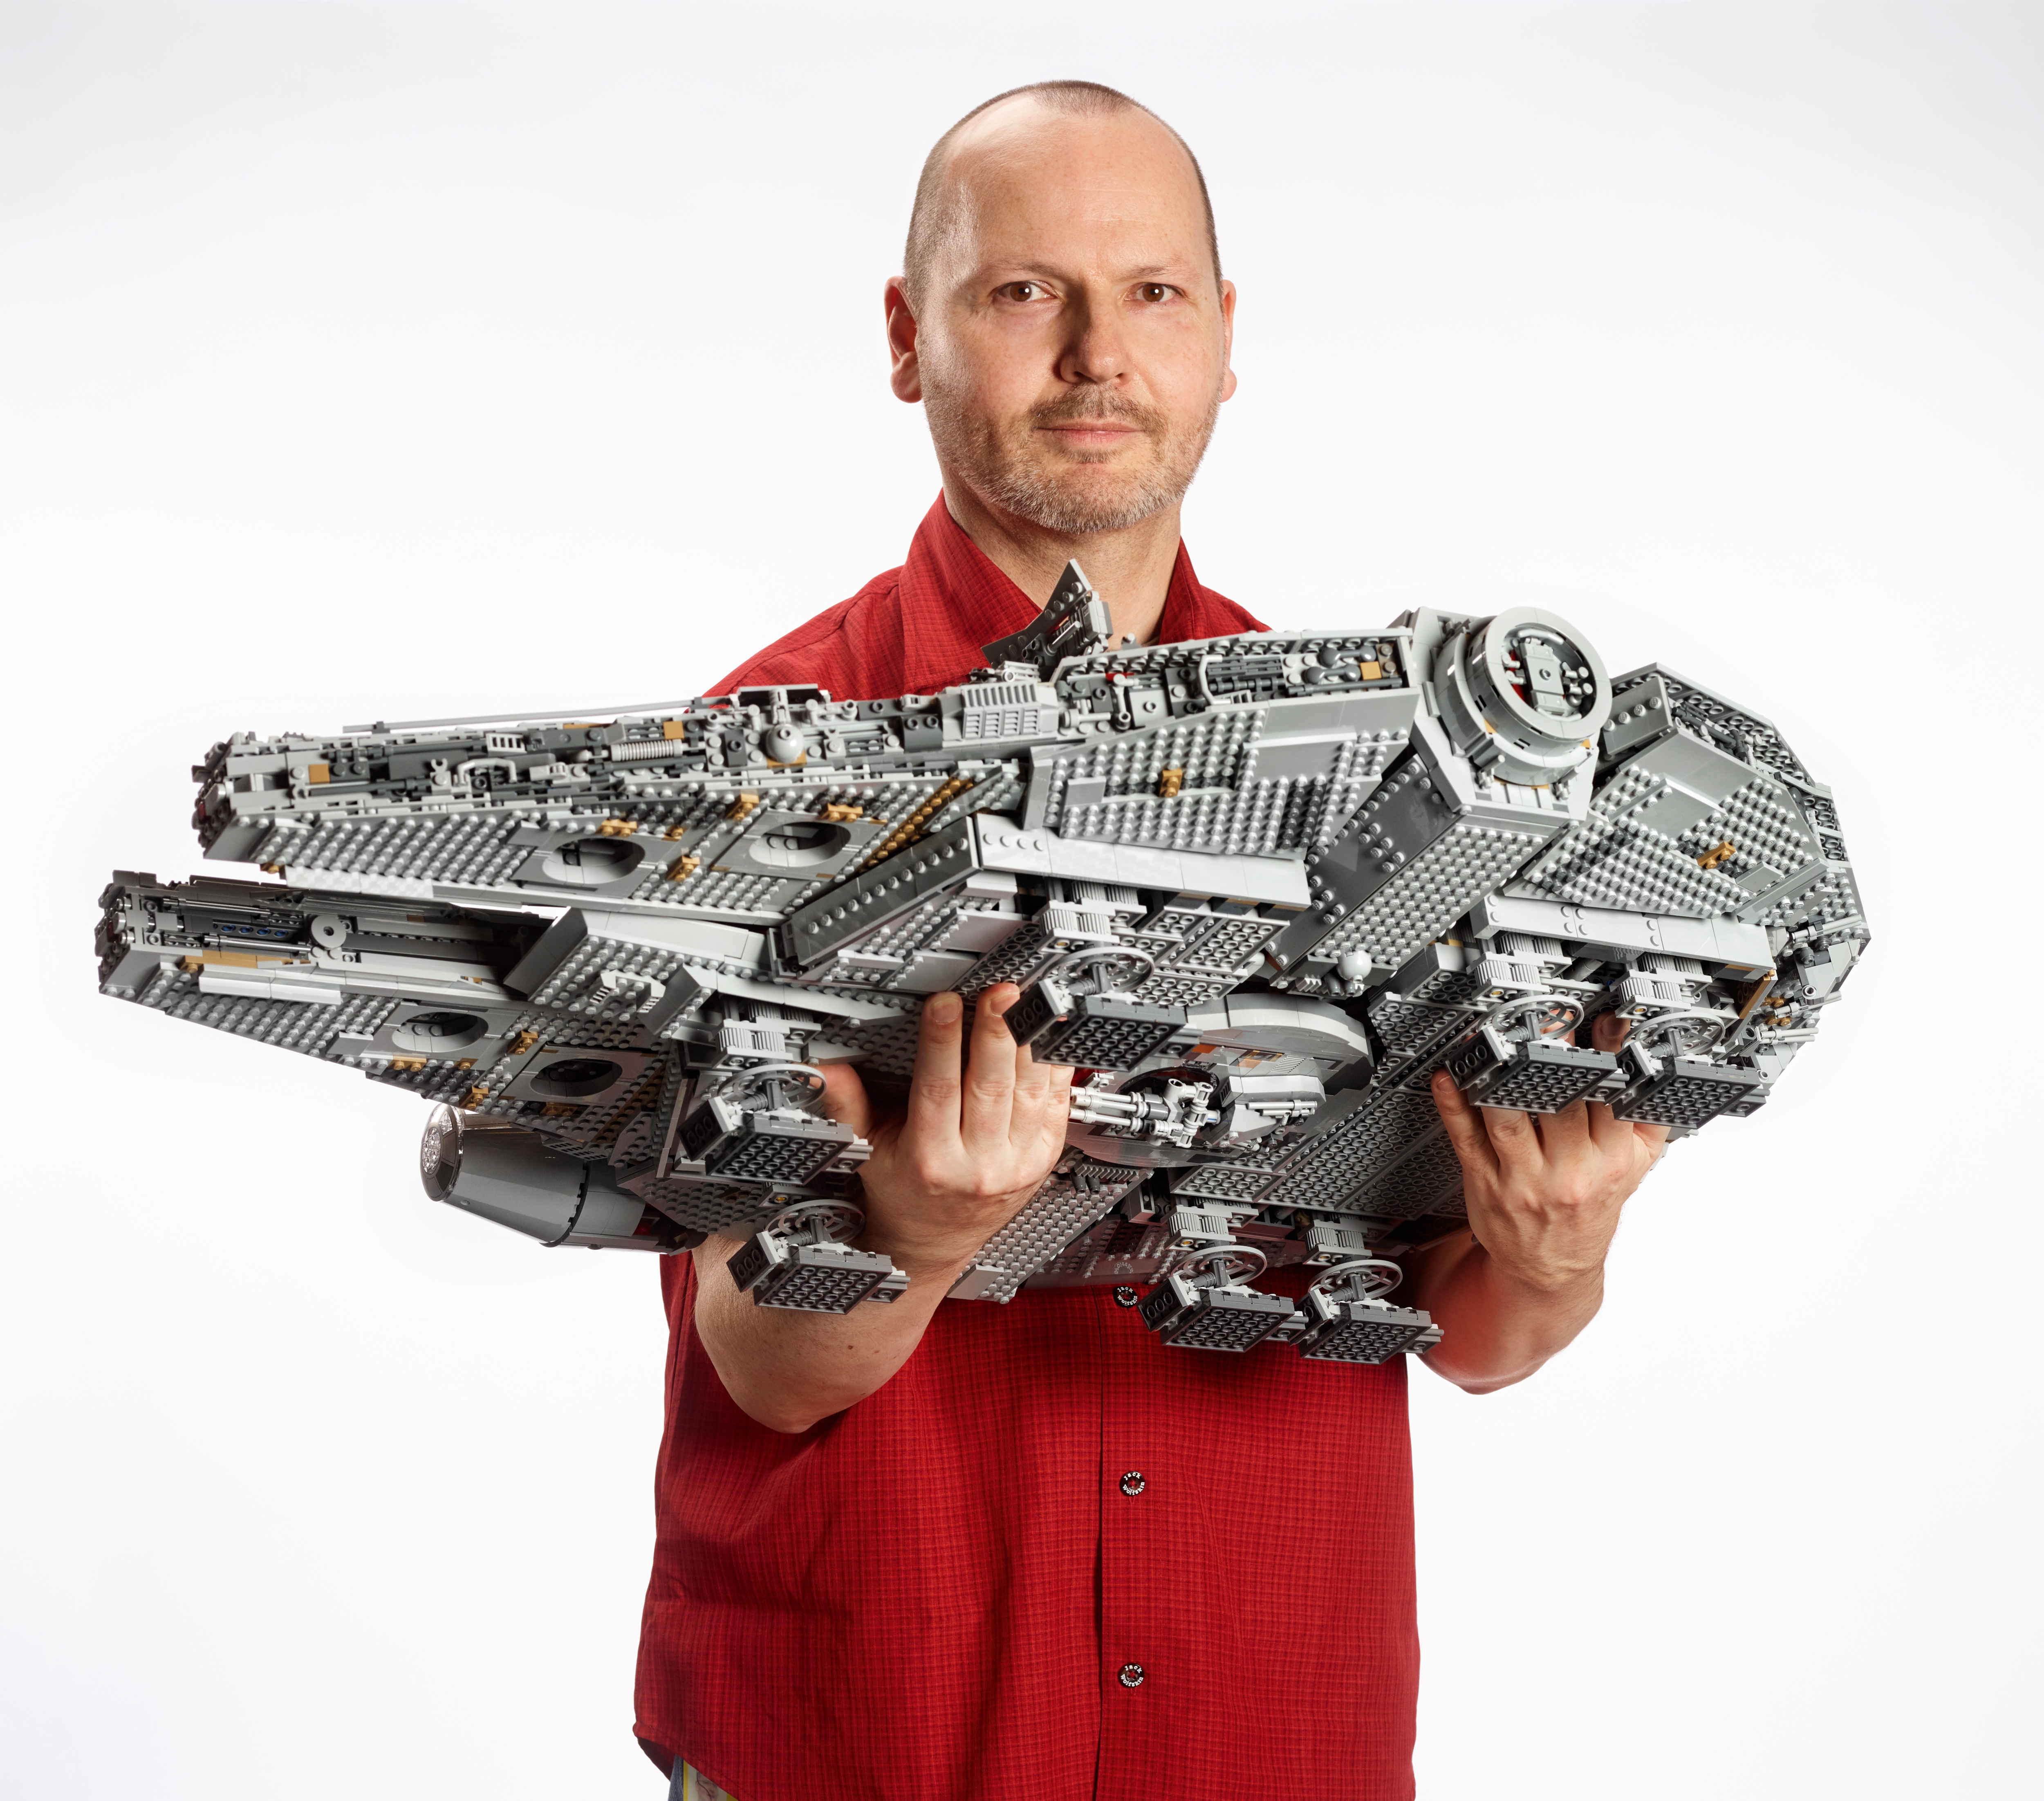 LEGO Star Wars Ultimate Millennium Falcon 75192 Expert Building